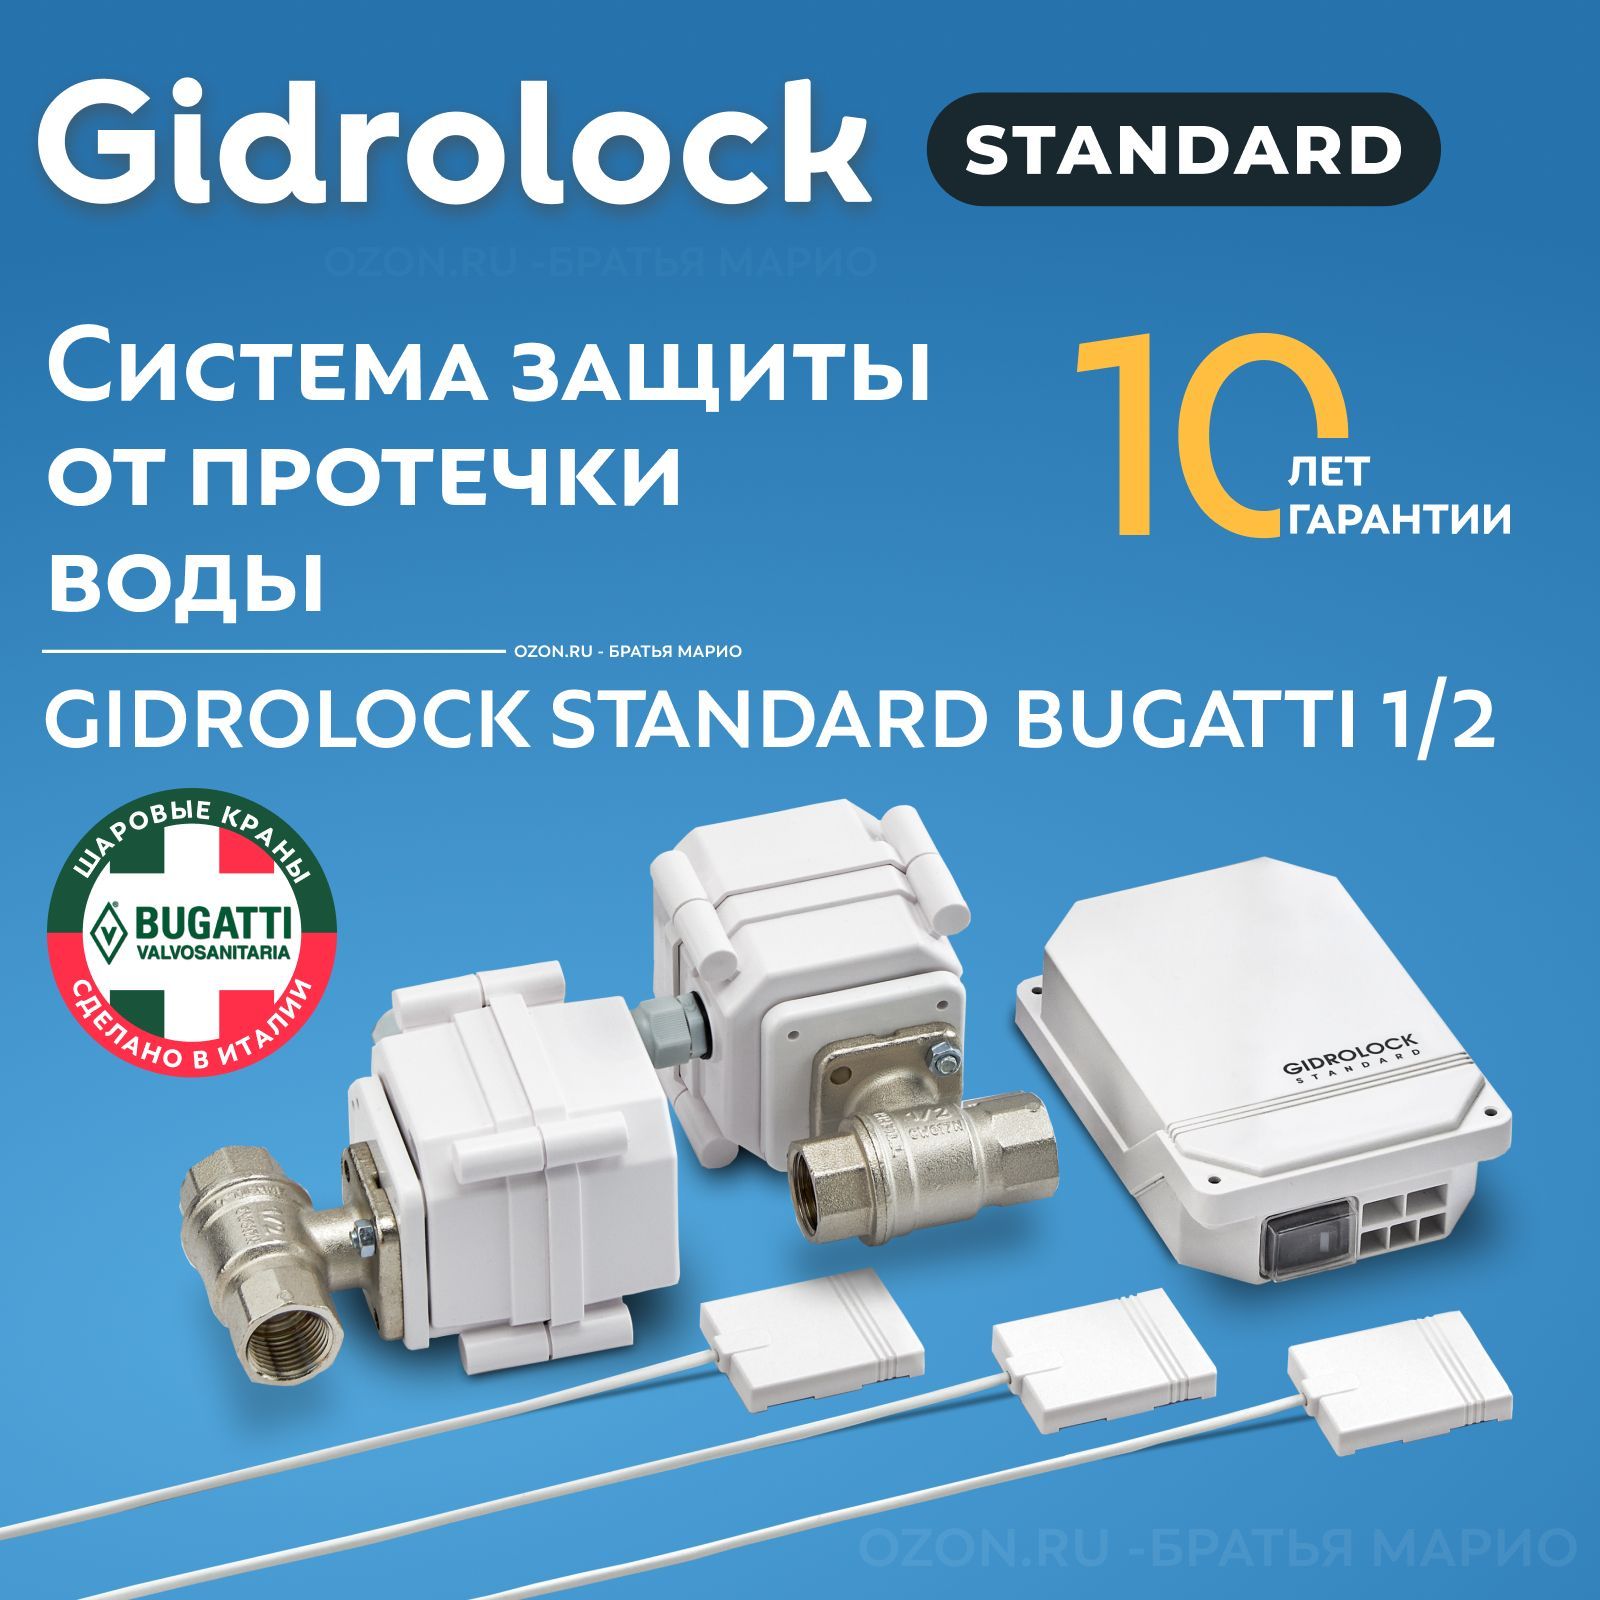 Gidrolock bugatti 1 2. Gidrolock Standard Wi-Fi.